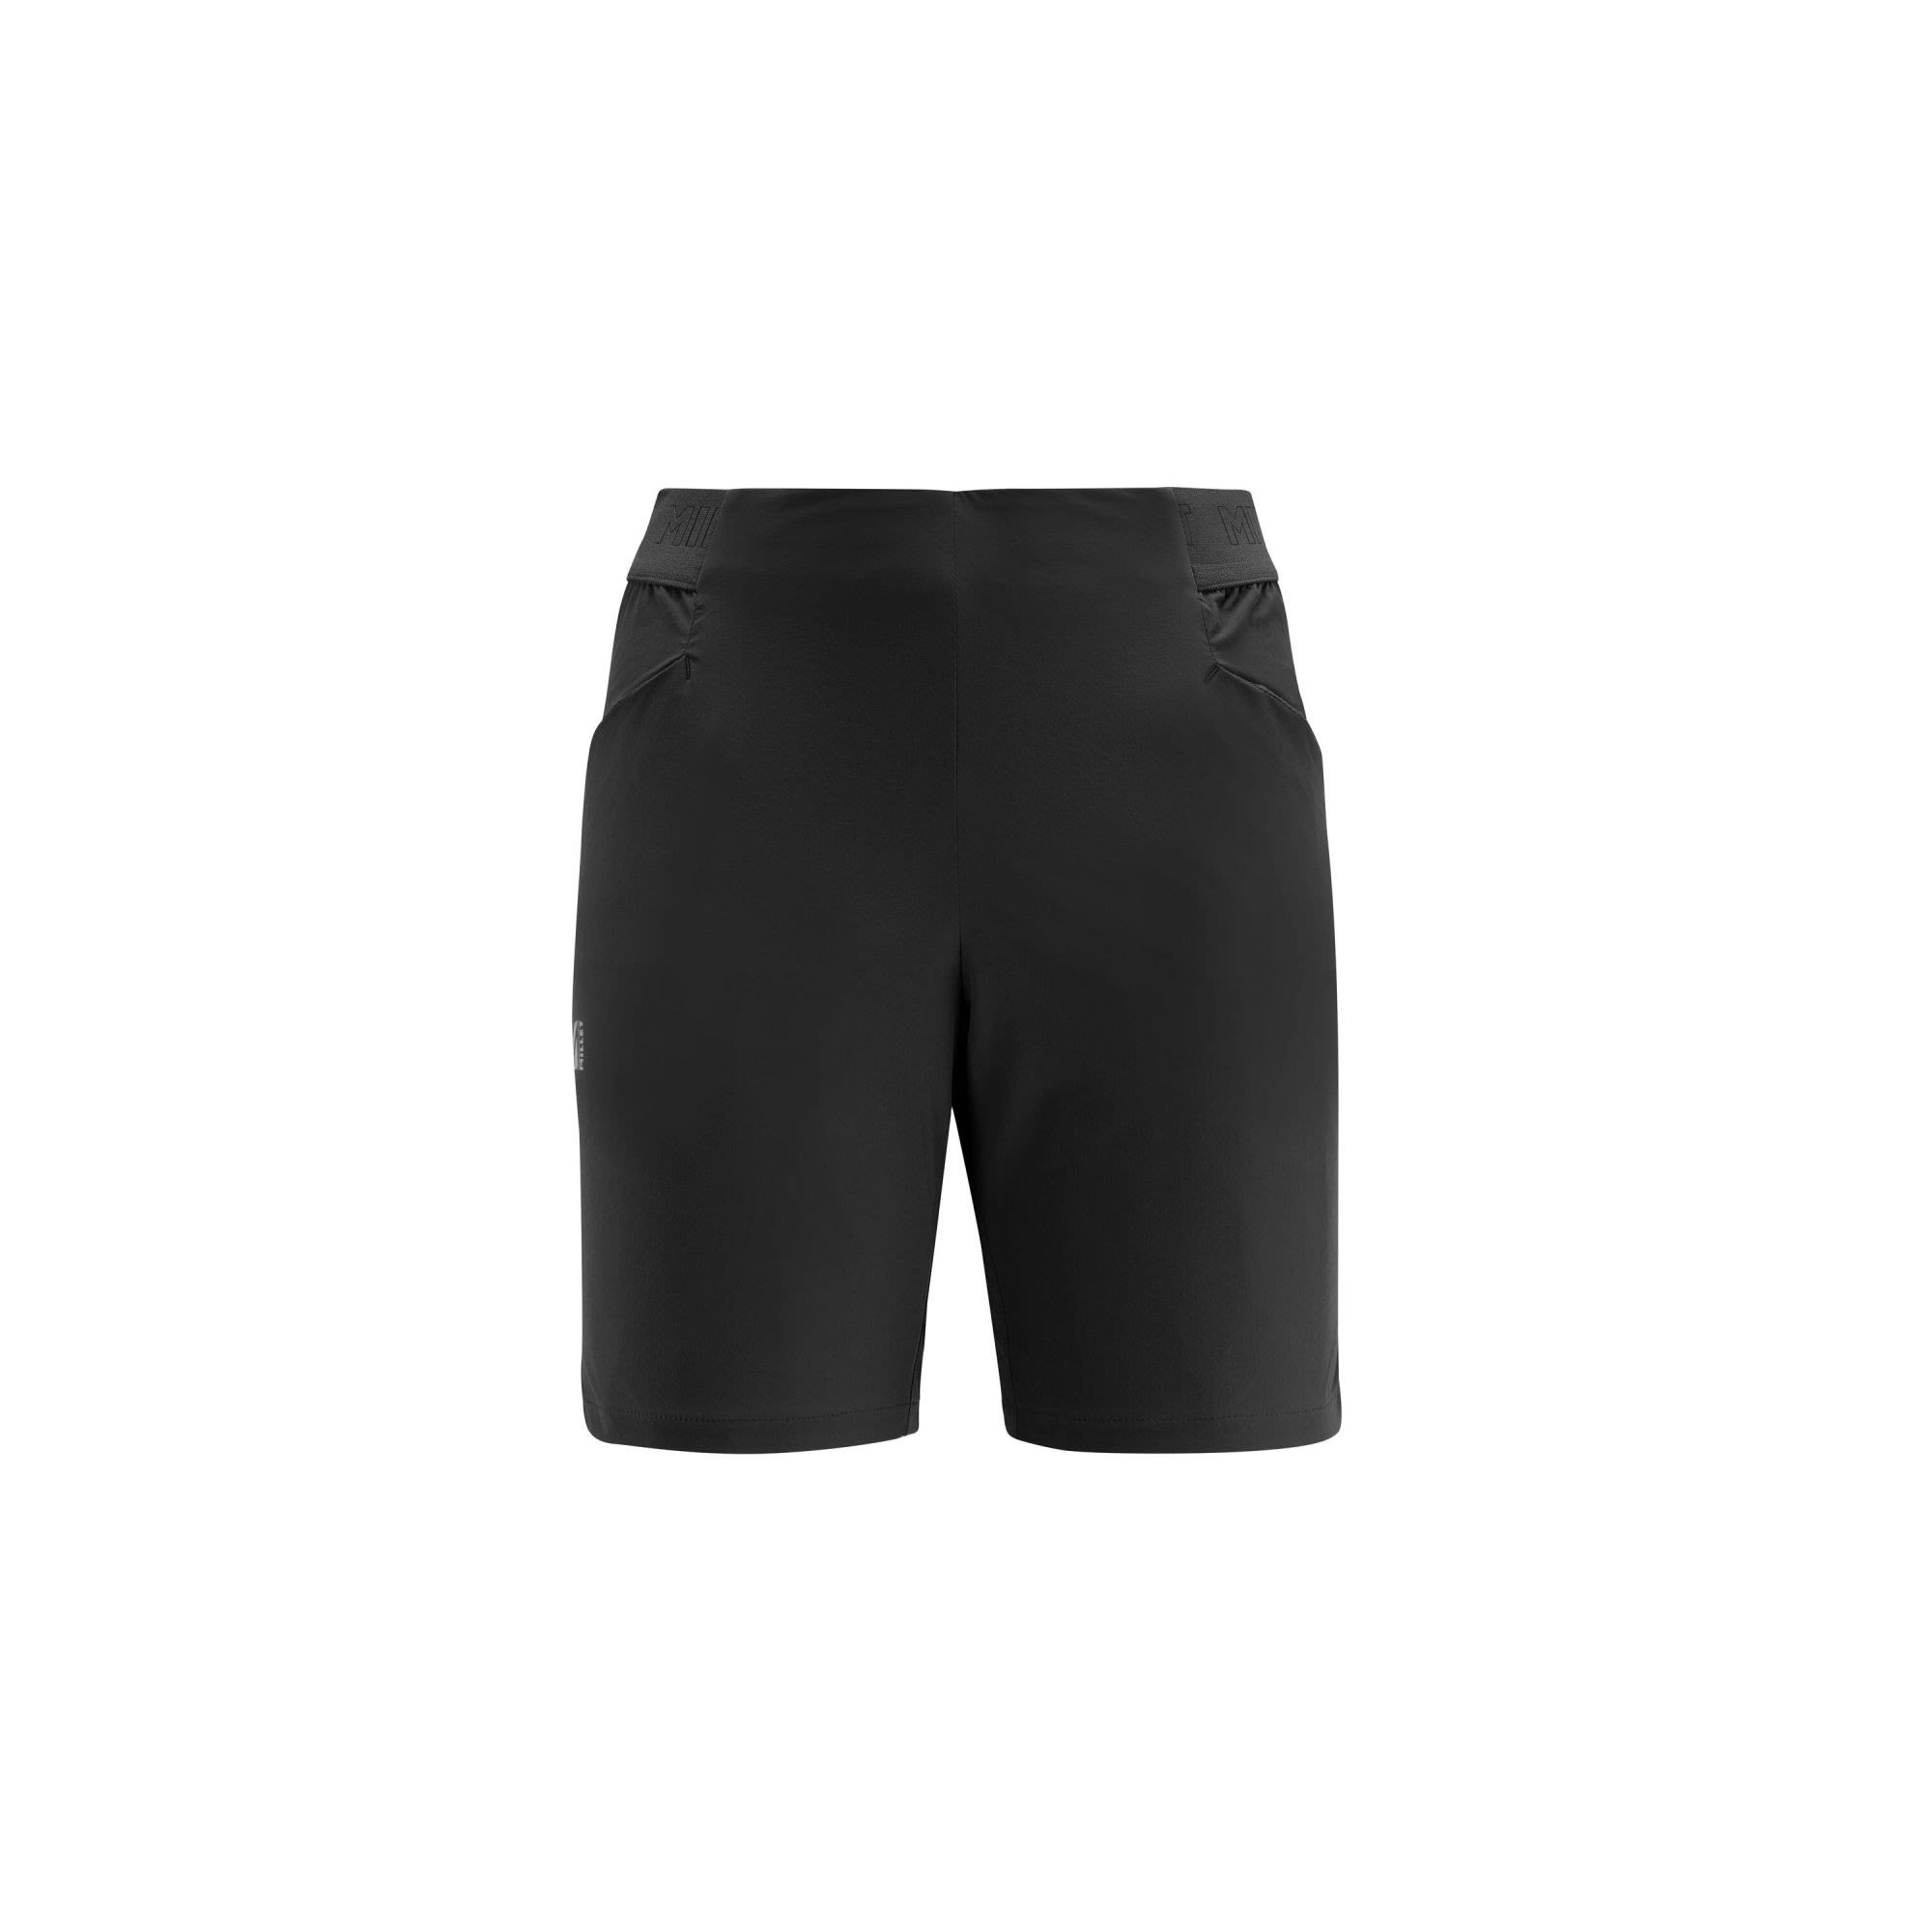 Millet LTK Speed Short Schwarz- Female Shorts- Grsse M - Farbe Black - Noir unter Millet